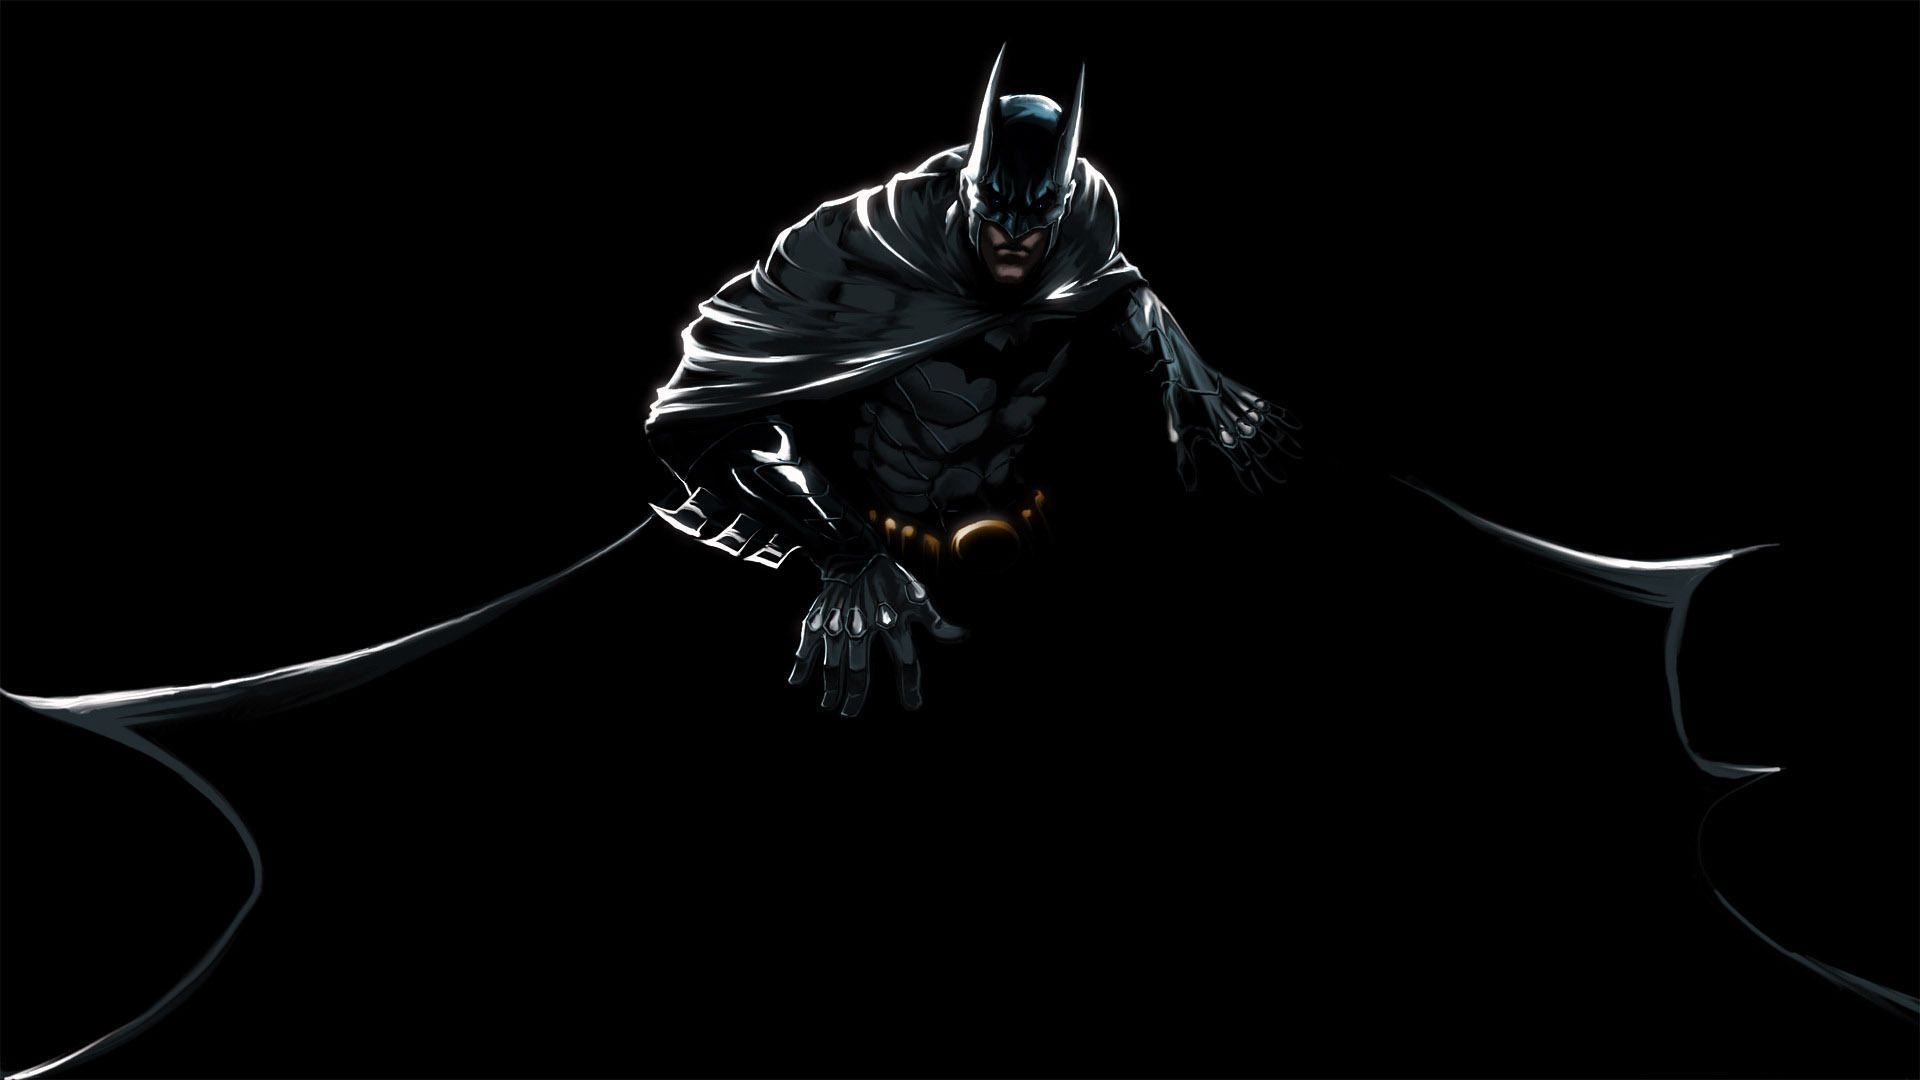 Batman-On-Black-Background-Hd-Desktop-Wallpapers-amzing-hd ...